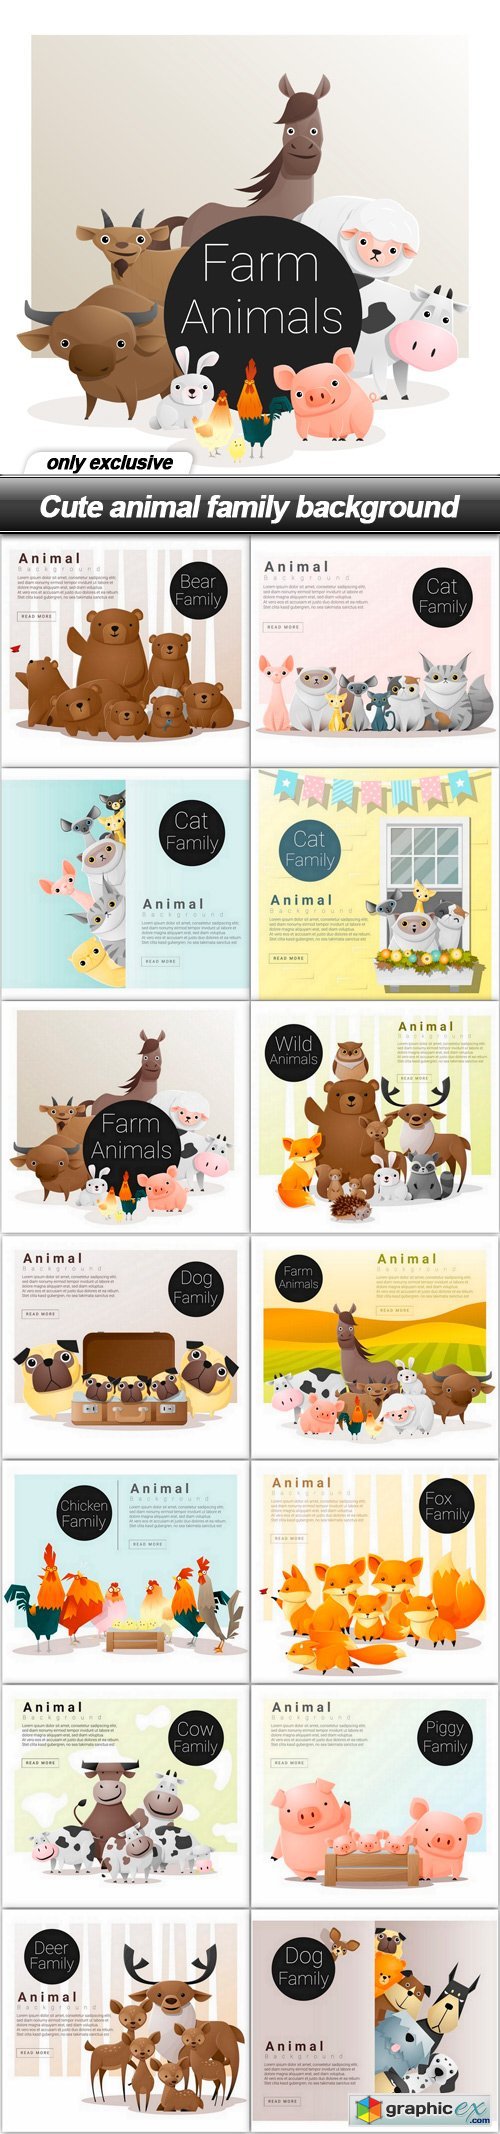 Cute animal family background - 20 EPS